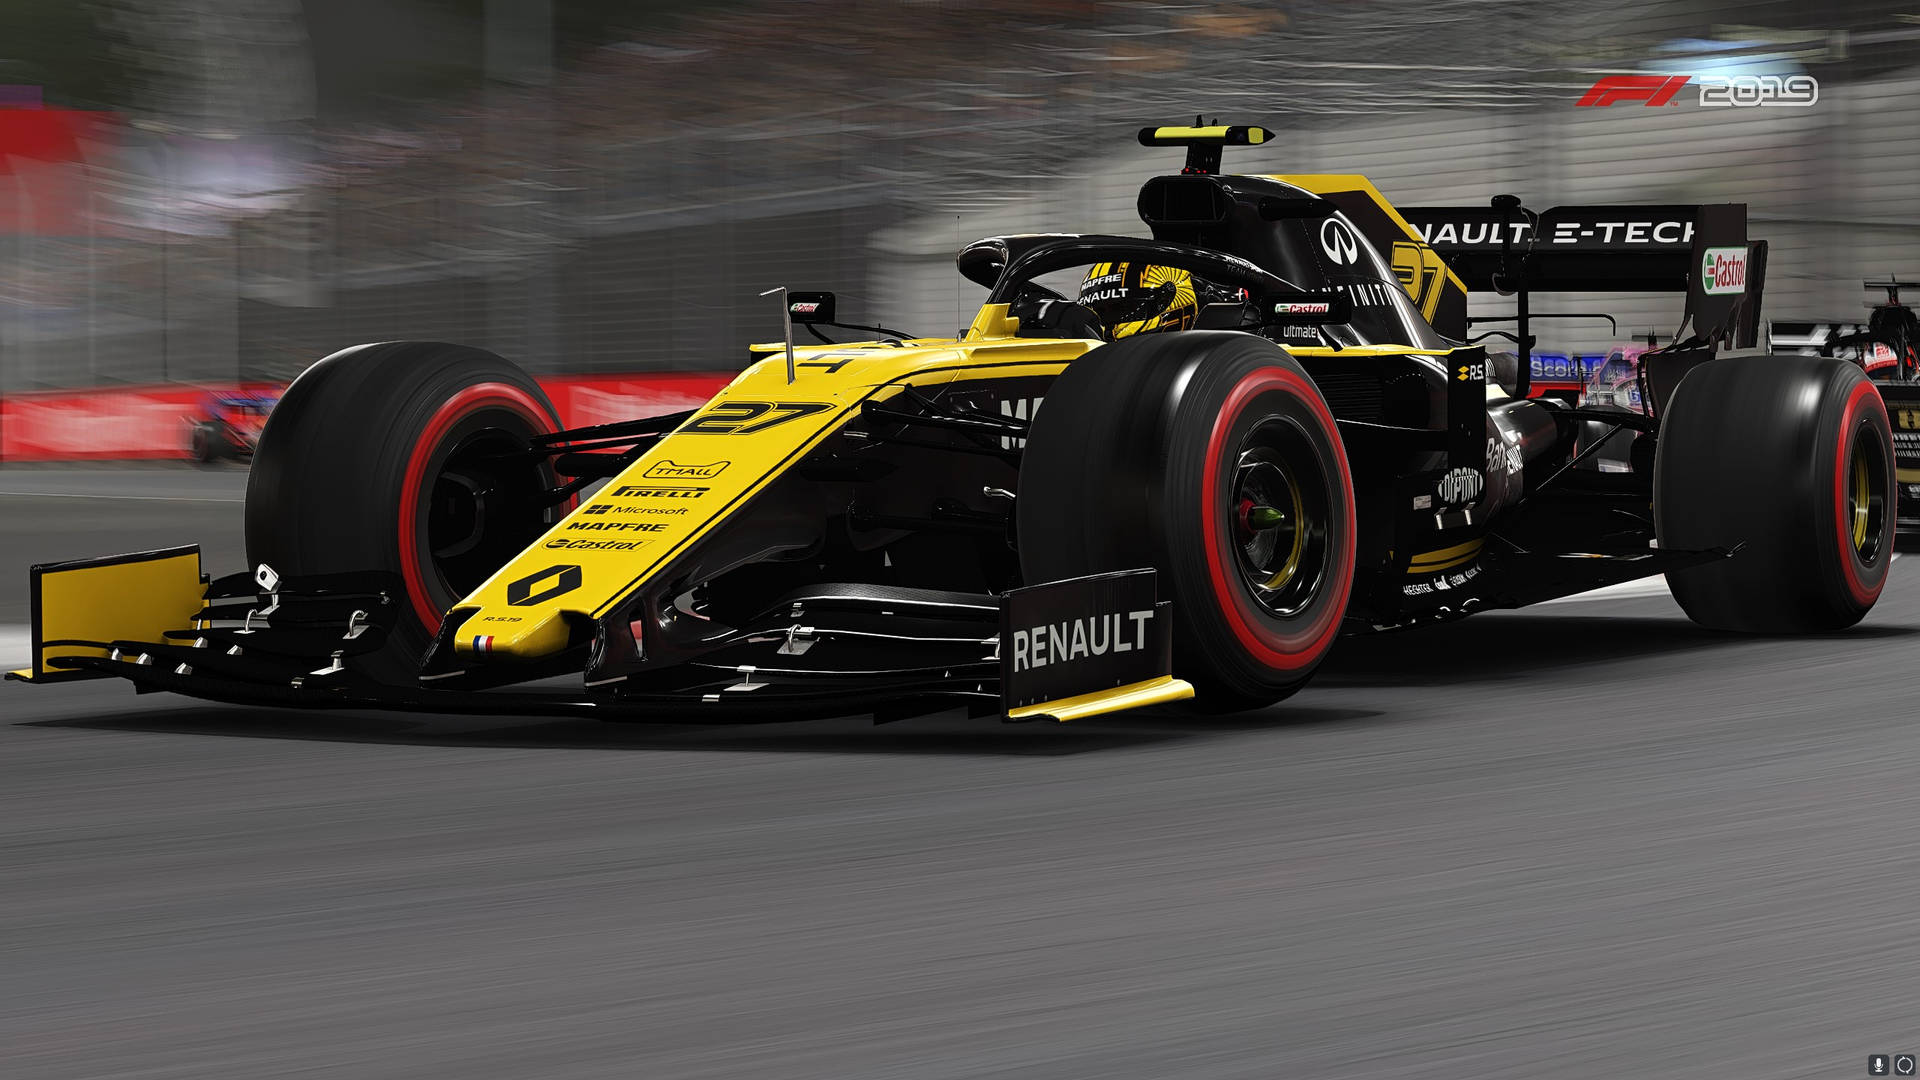 Renault #27 Car In F1 2019